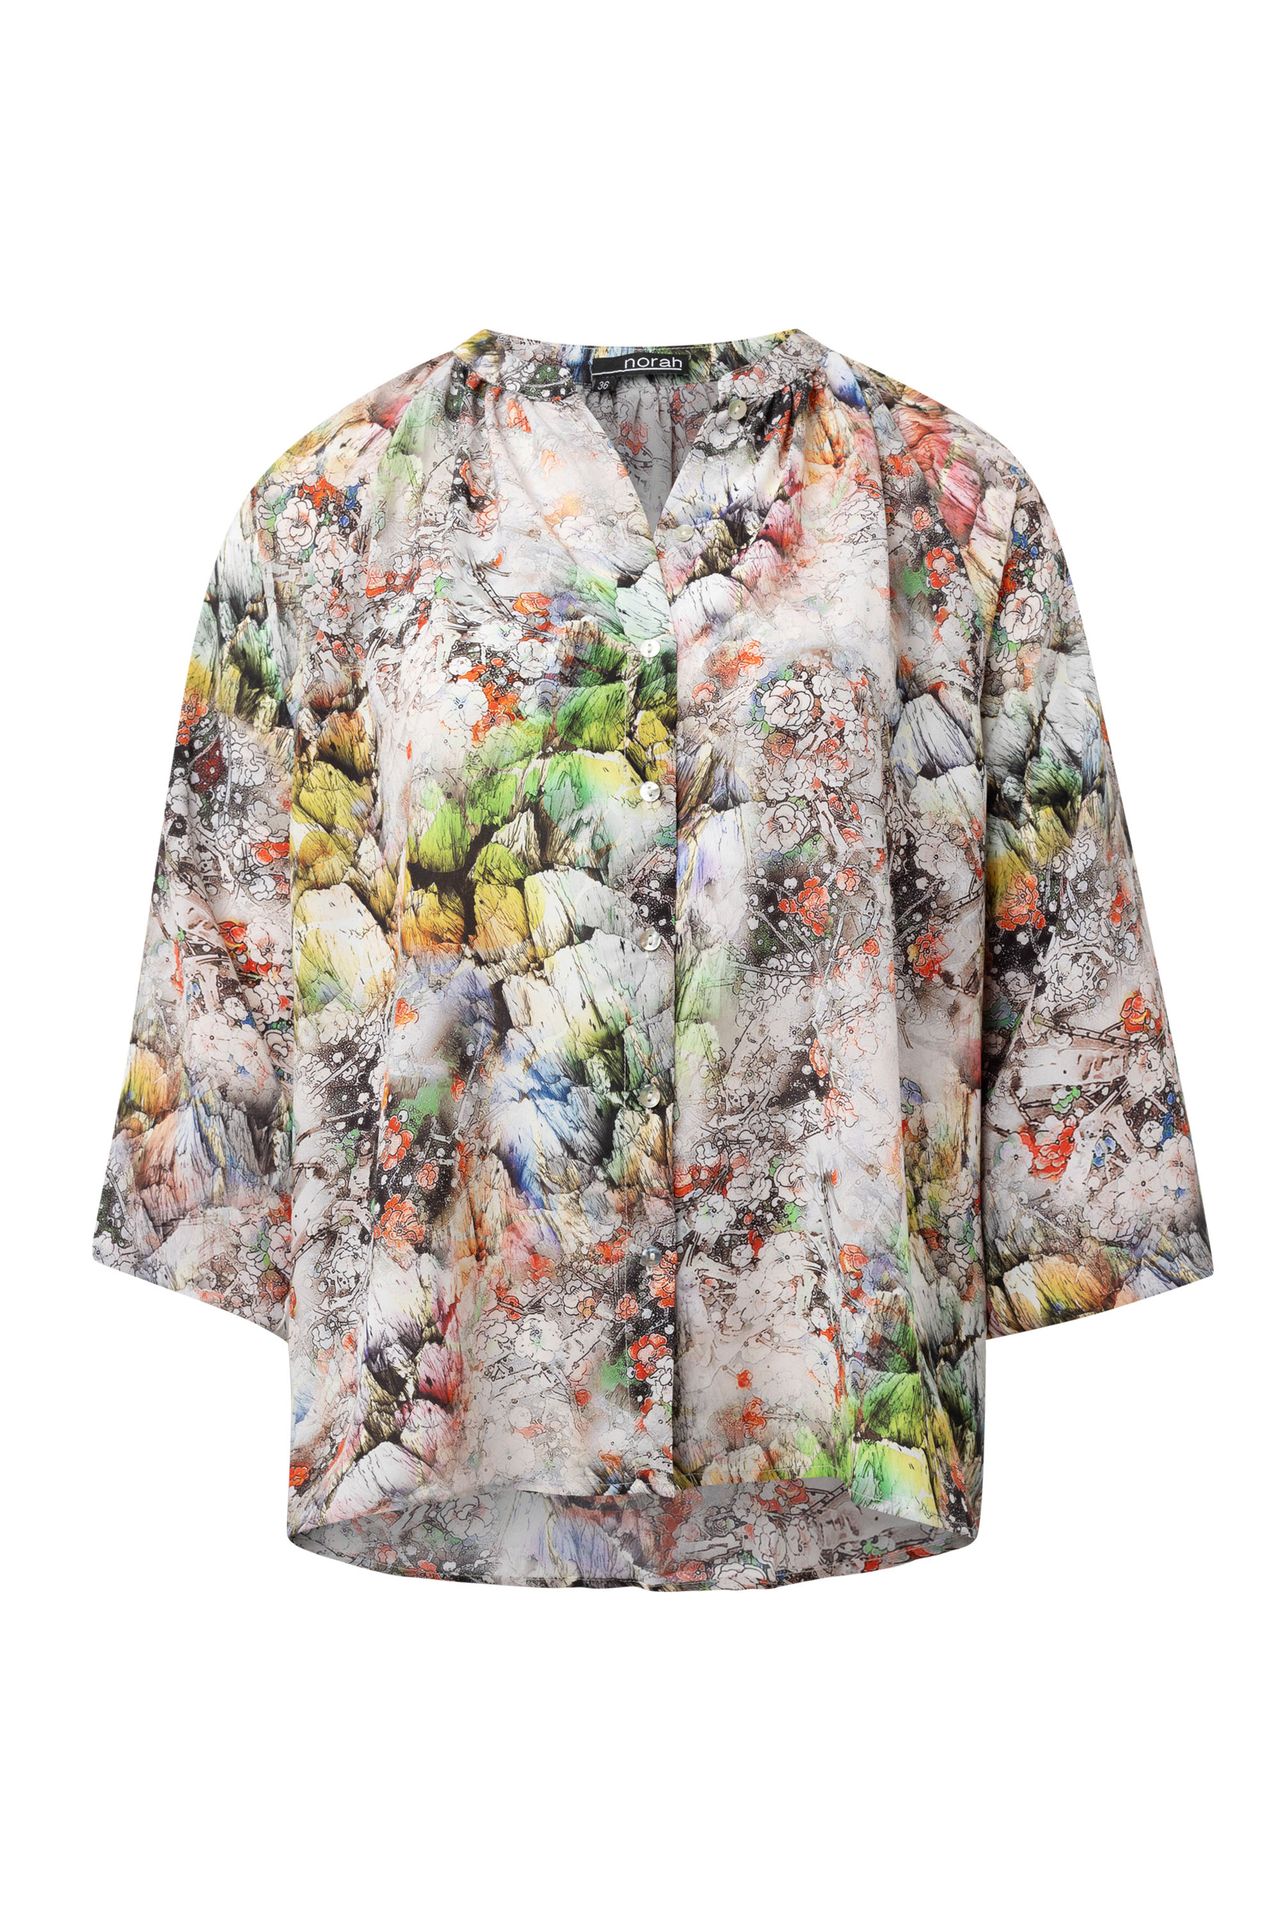  Meerkleurige blouse multicolor 214418-002-44